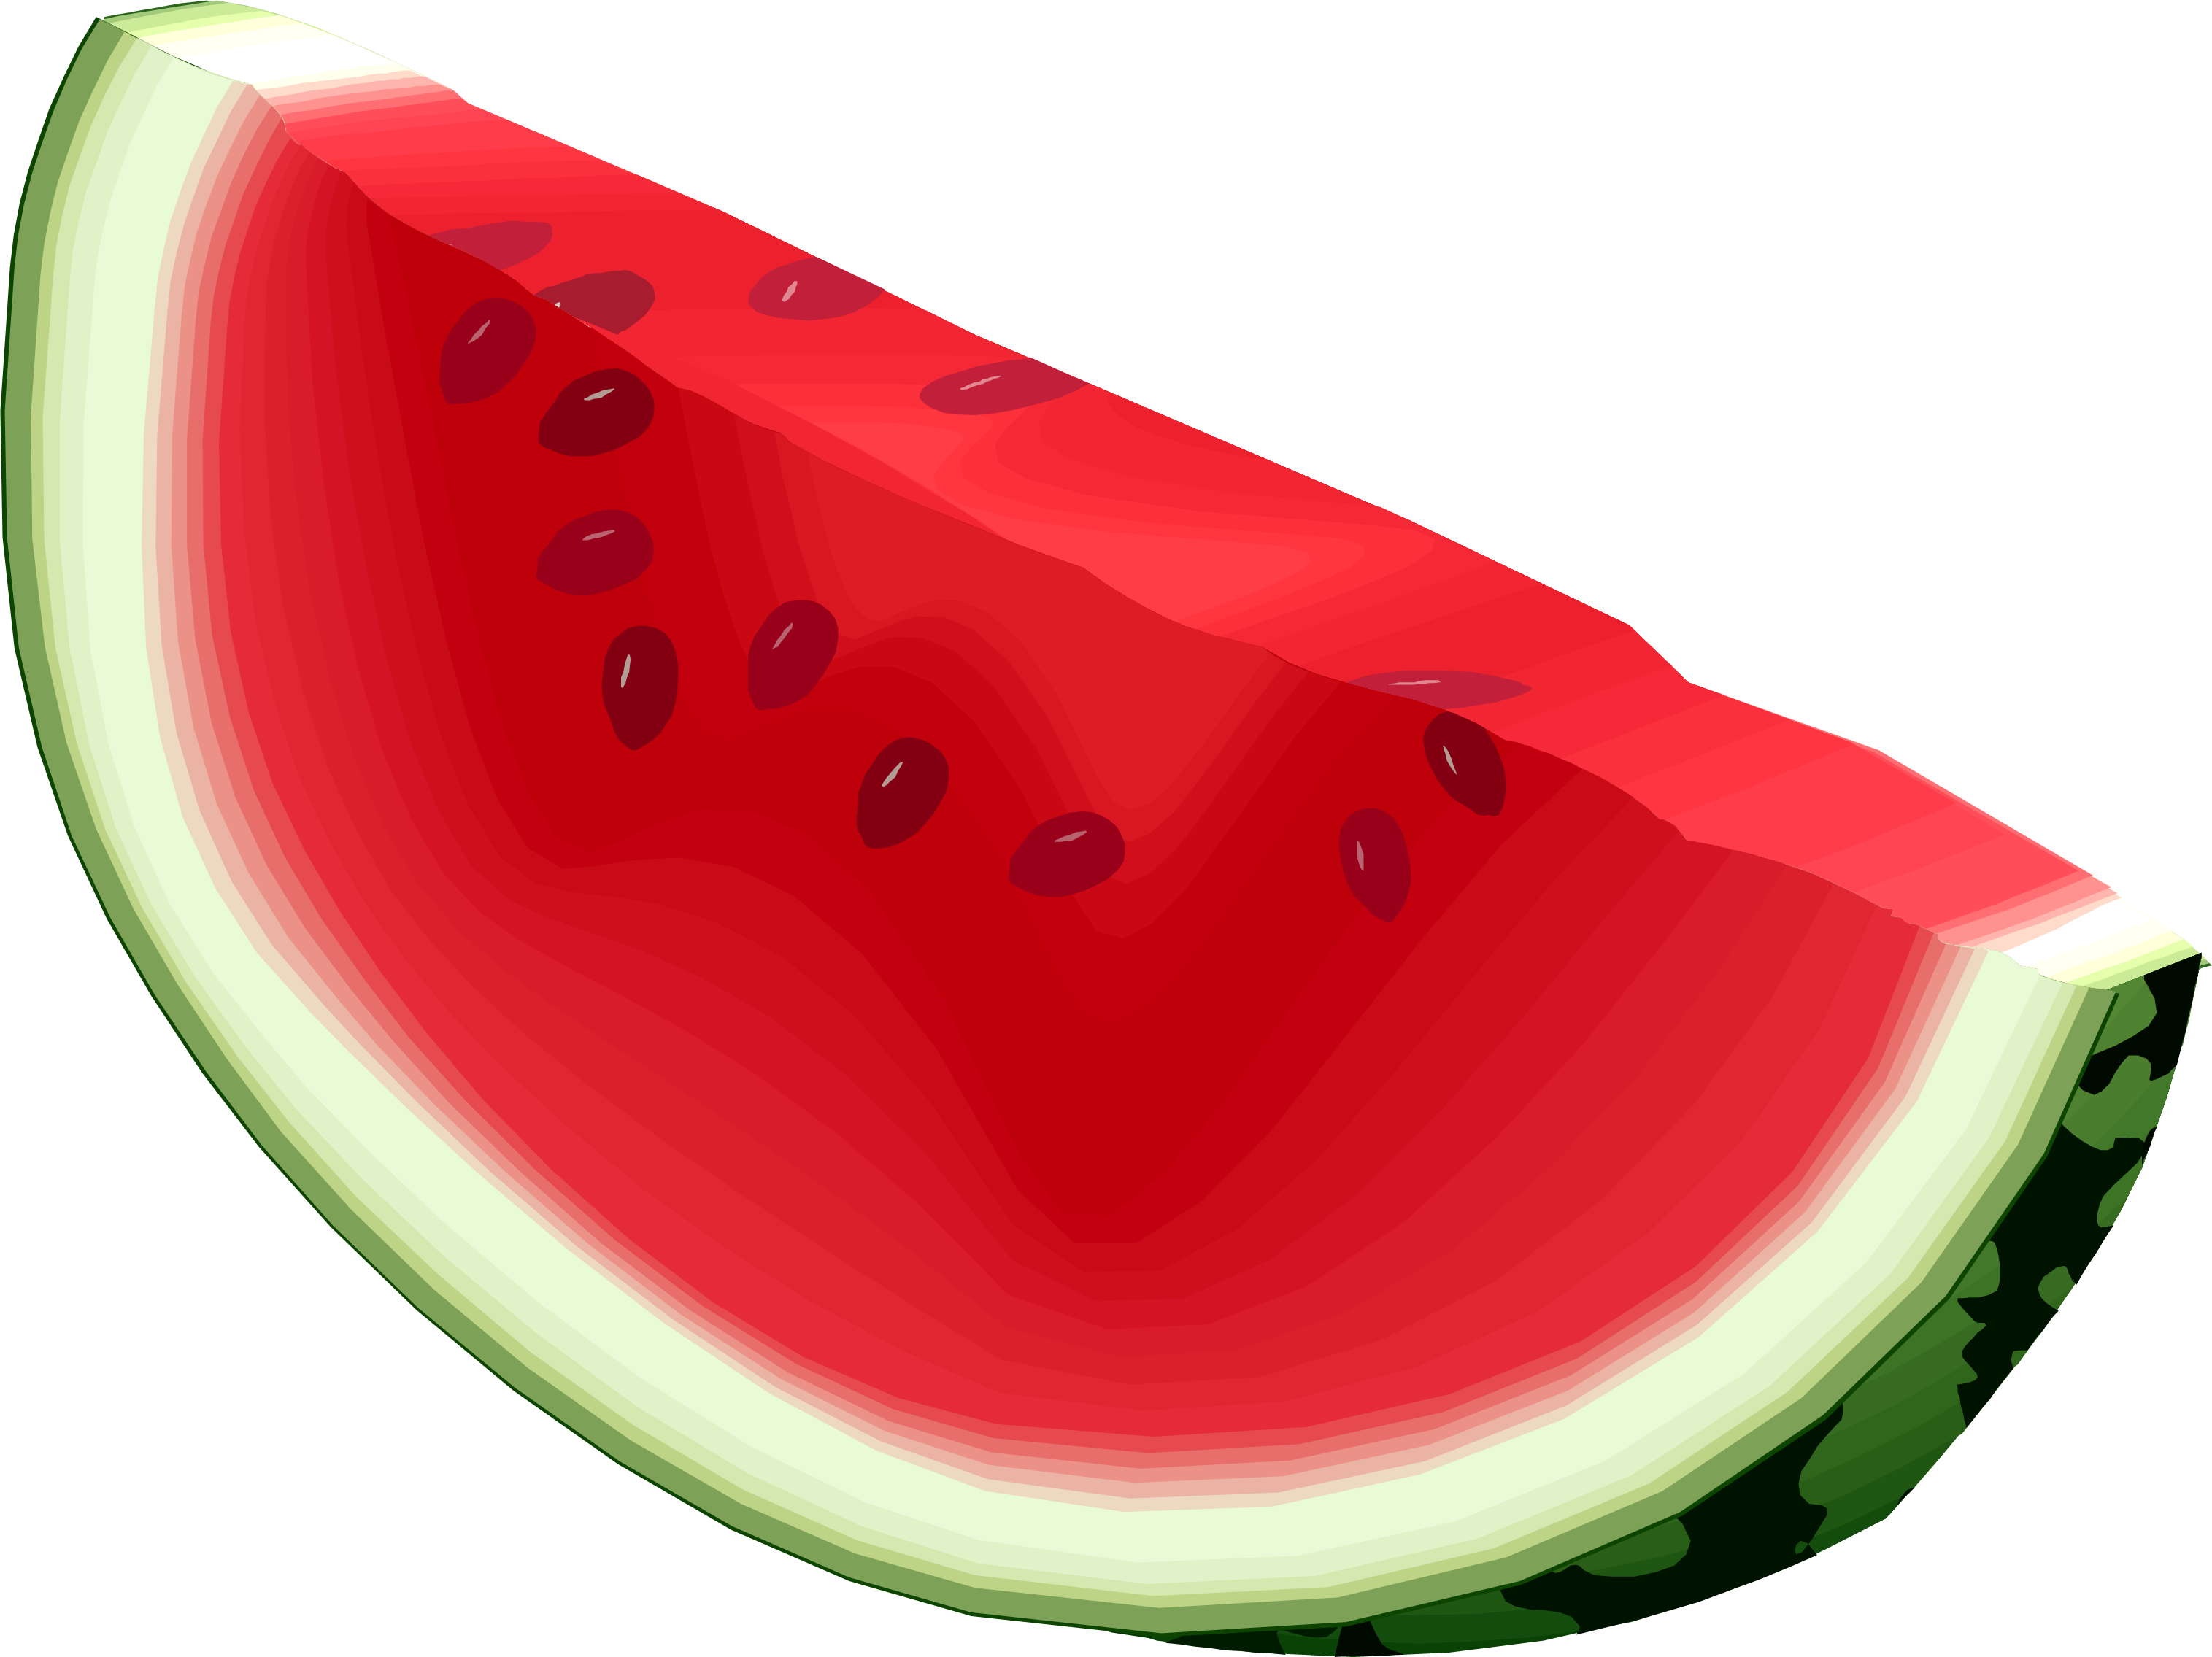 Download wallpaper: watermelon, photo, download, red watermelon ...